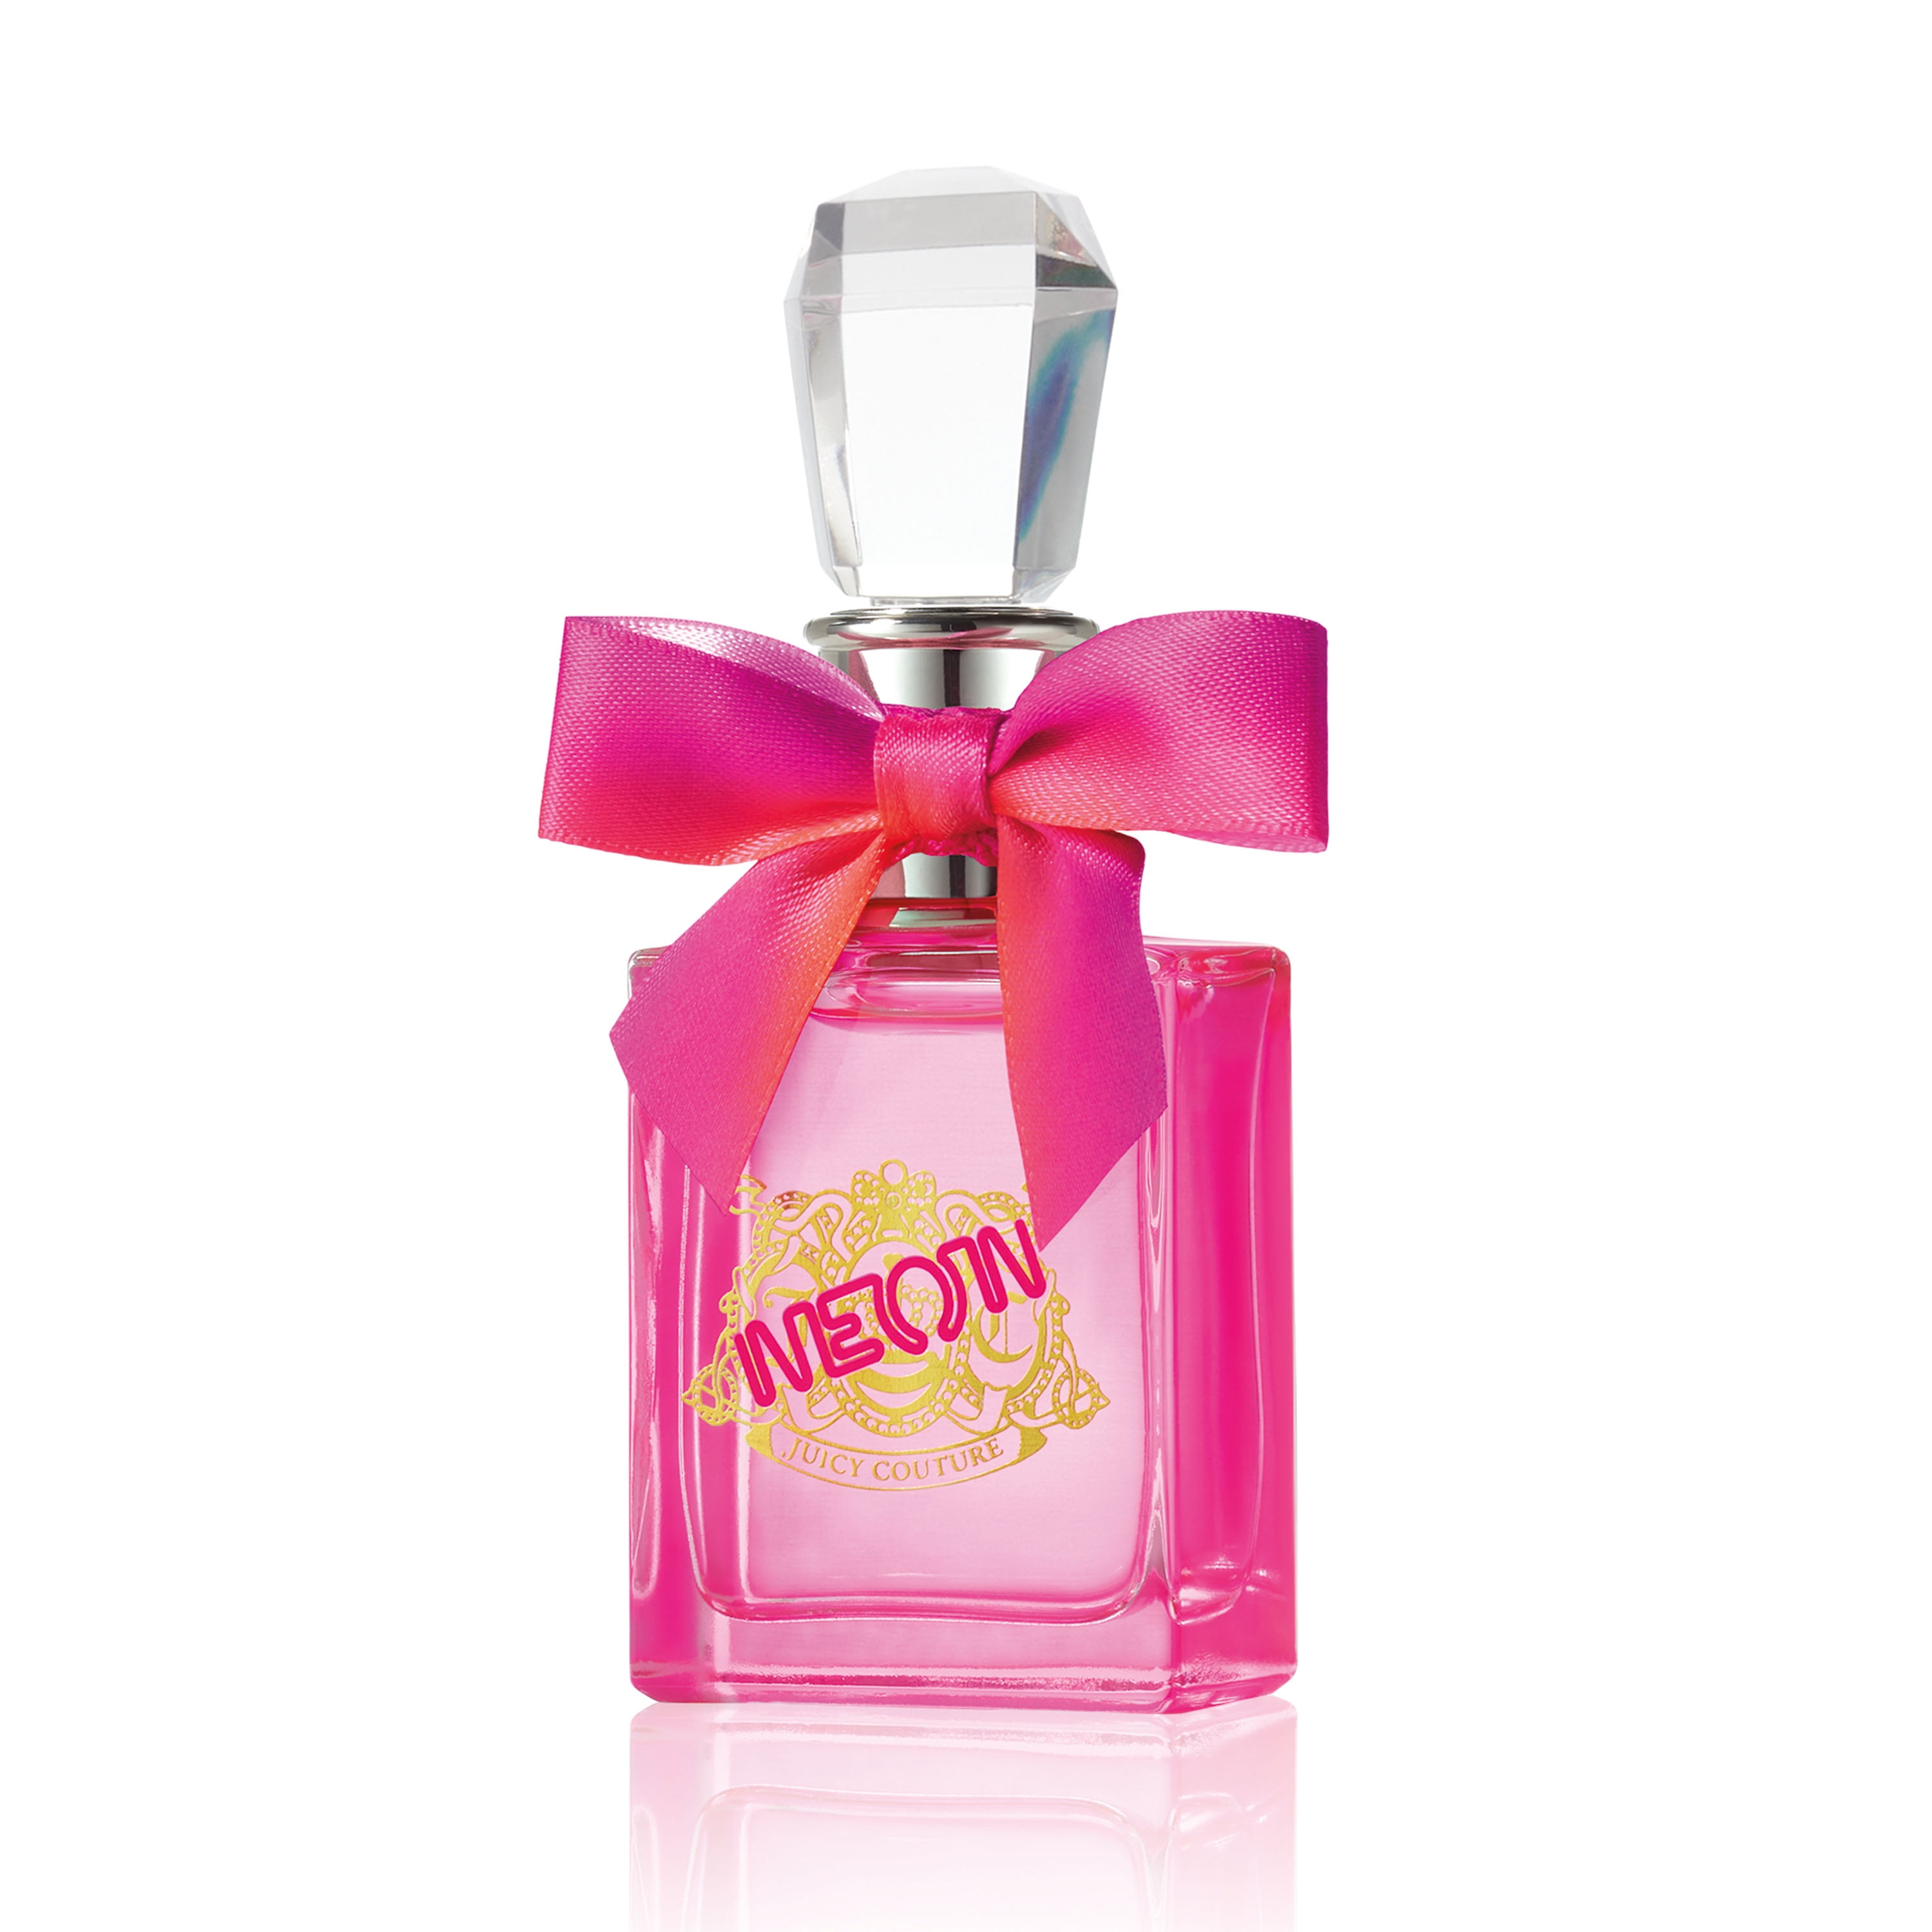 Juicy Couture Viva La Juicy Neon, Perfume for Women, 1.0 oz - Walmart.com